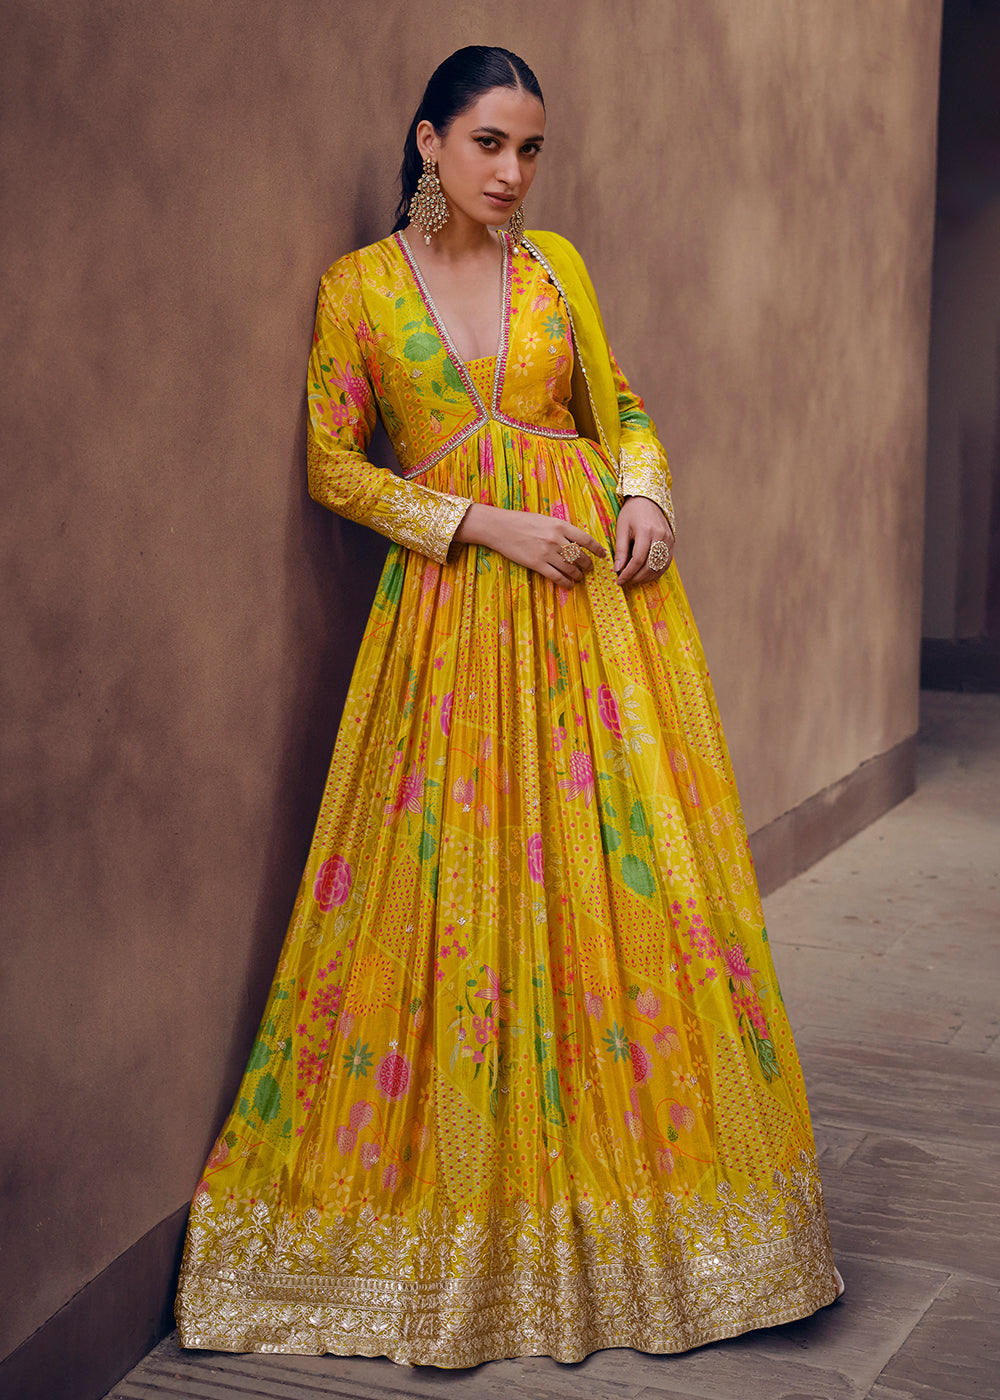 Buy Now Mustard Yellow Digital Printed Designer Anarkali Gown Online in USA, UK, Australia, New Zealand, Canada & Worldwide at Empress Clothing.